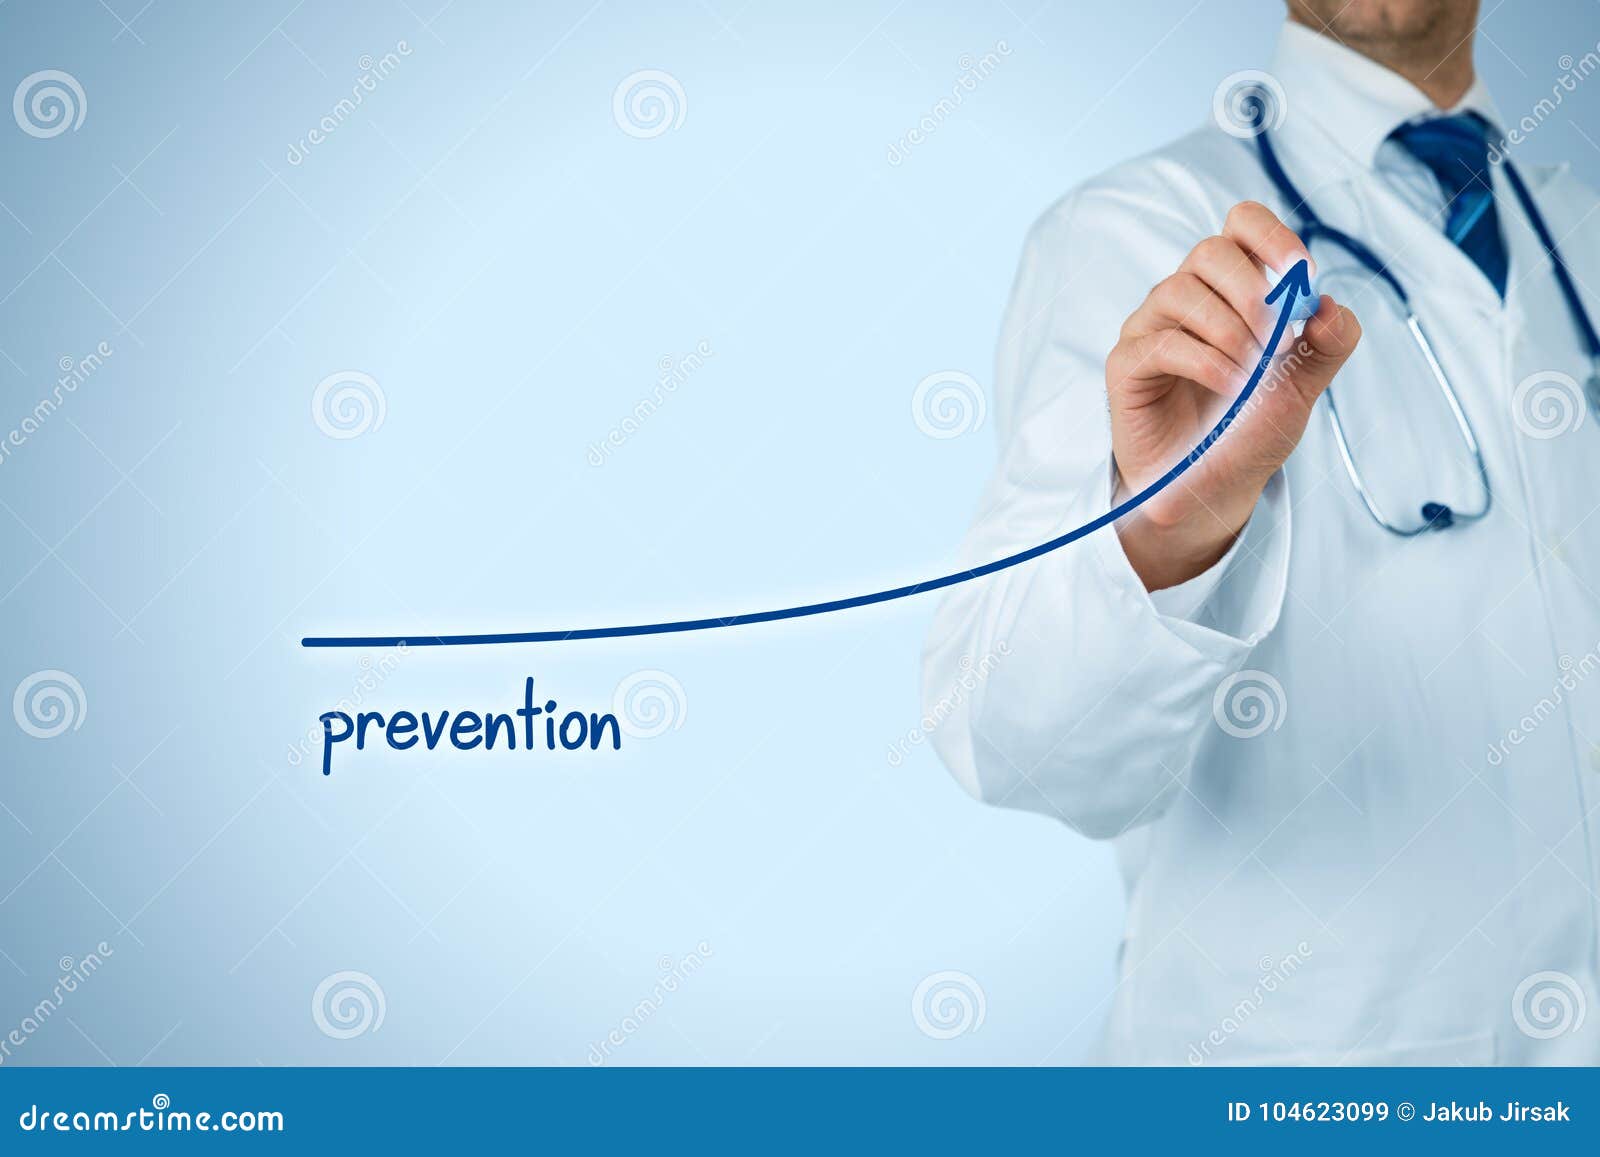 doctor improve prevention